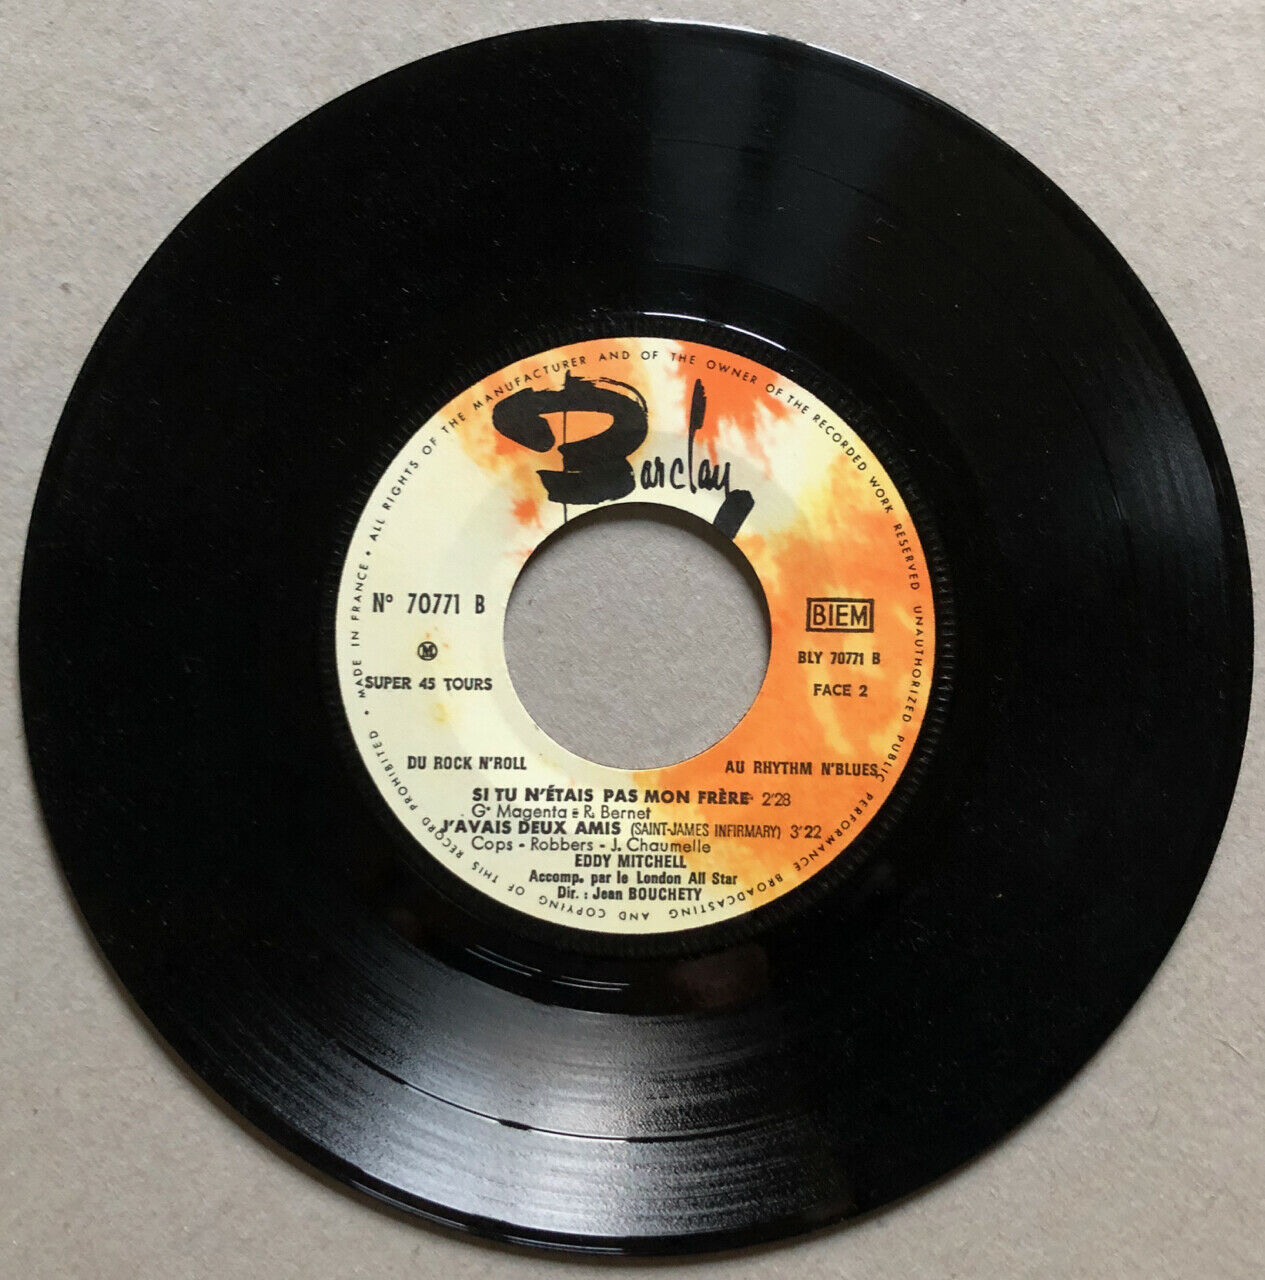 Eddy Mitchell — I lost my love + 3 — Barclay — 70771 M — 1965.